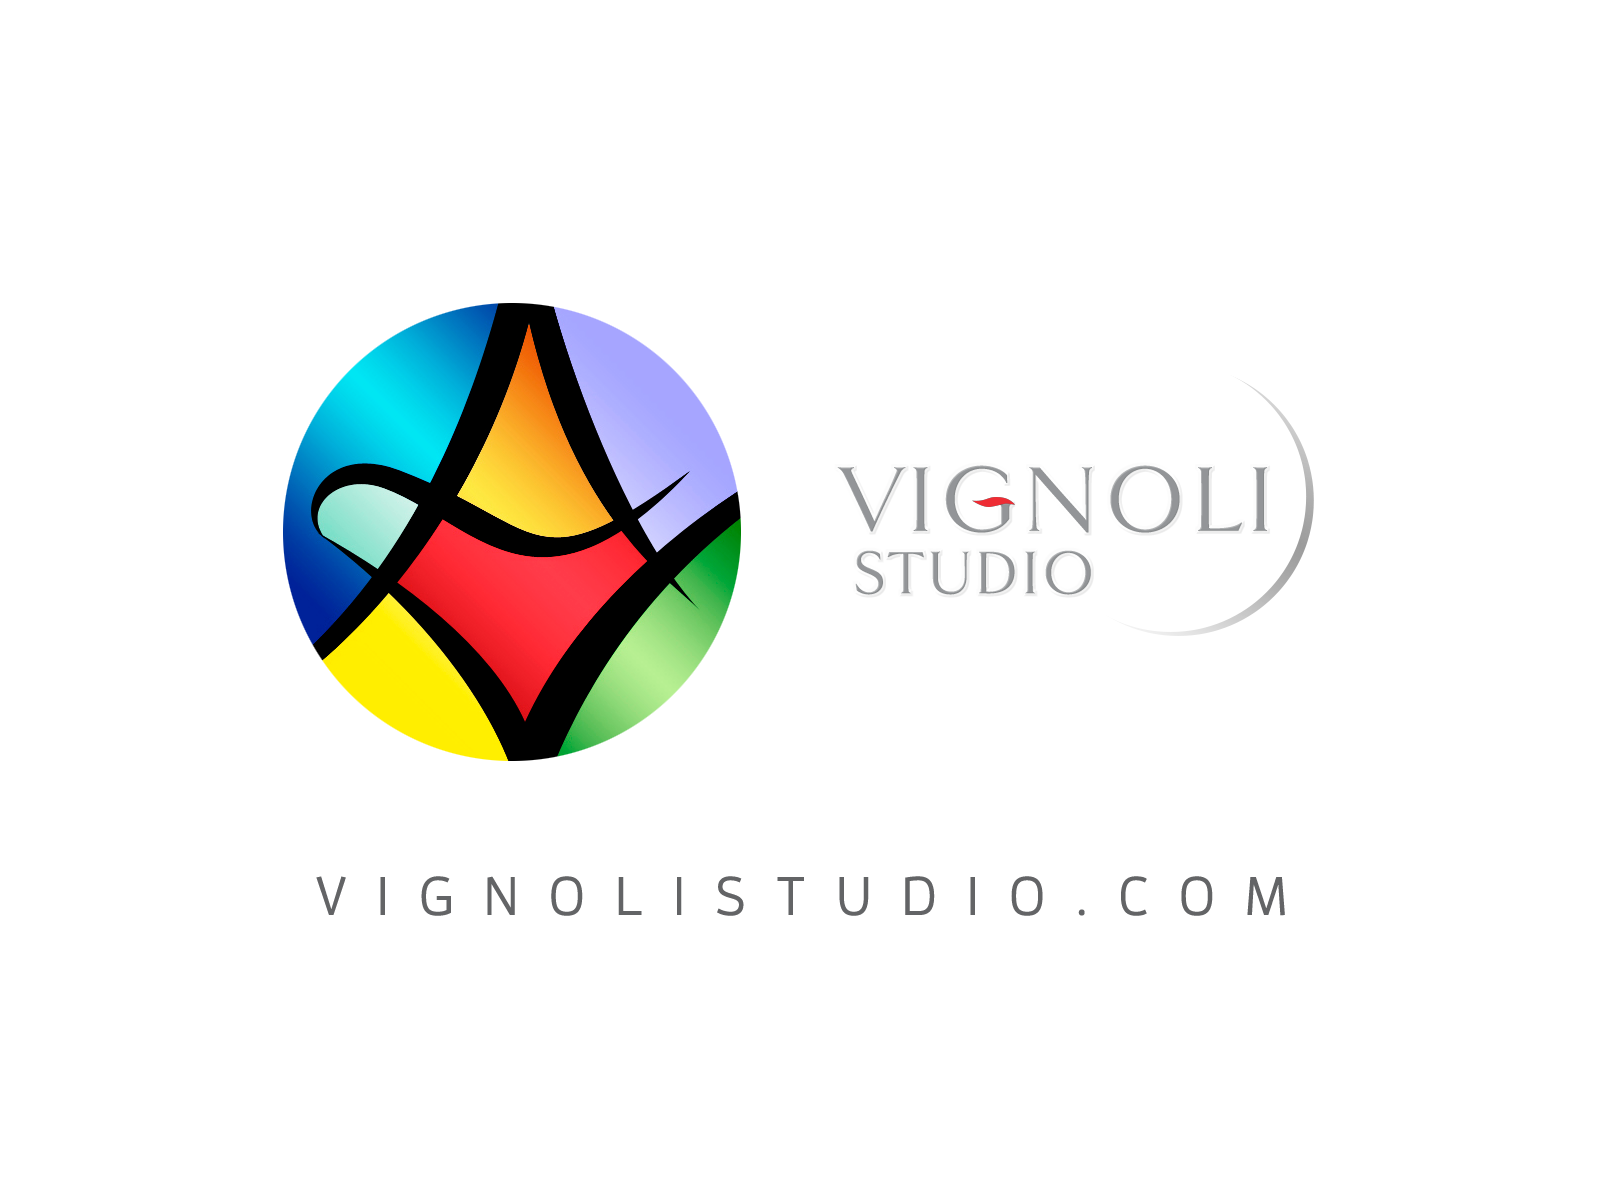 Alex Vignoli Studio